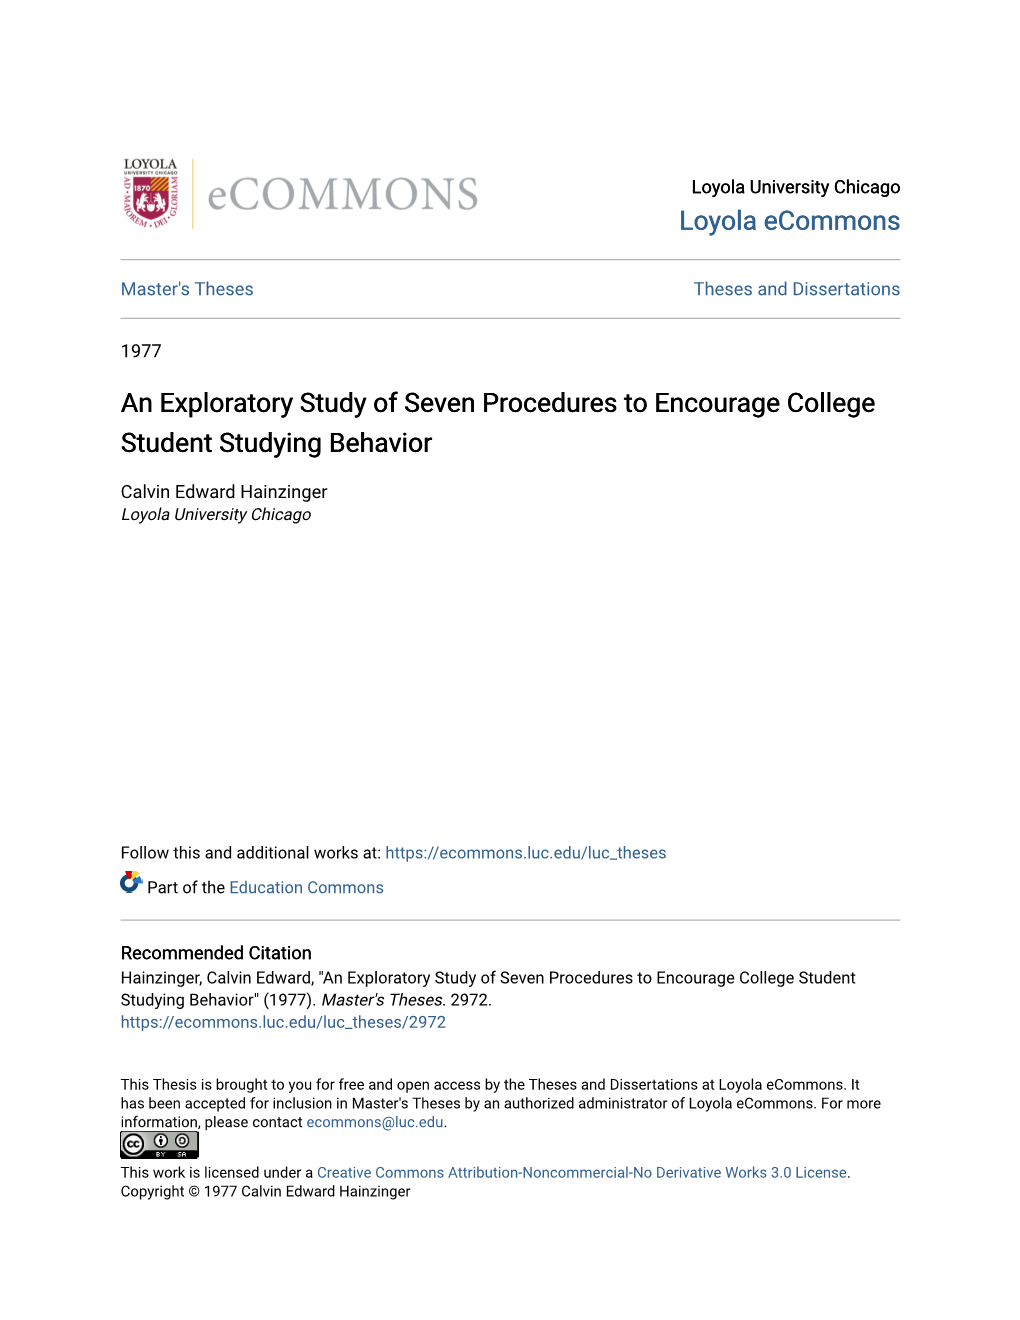 An Exploratory Study of Seven Procedures to Encourage College Student Studying Behavior